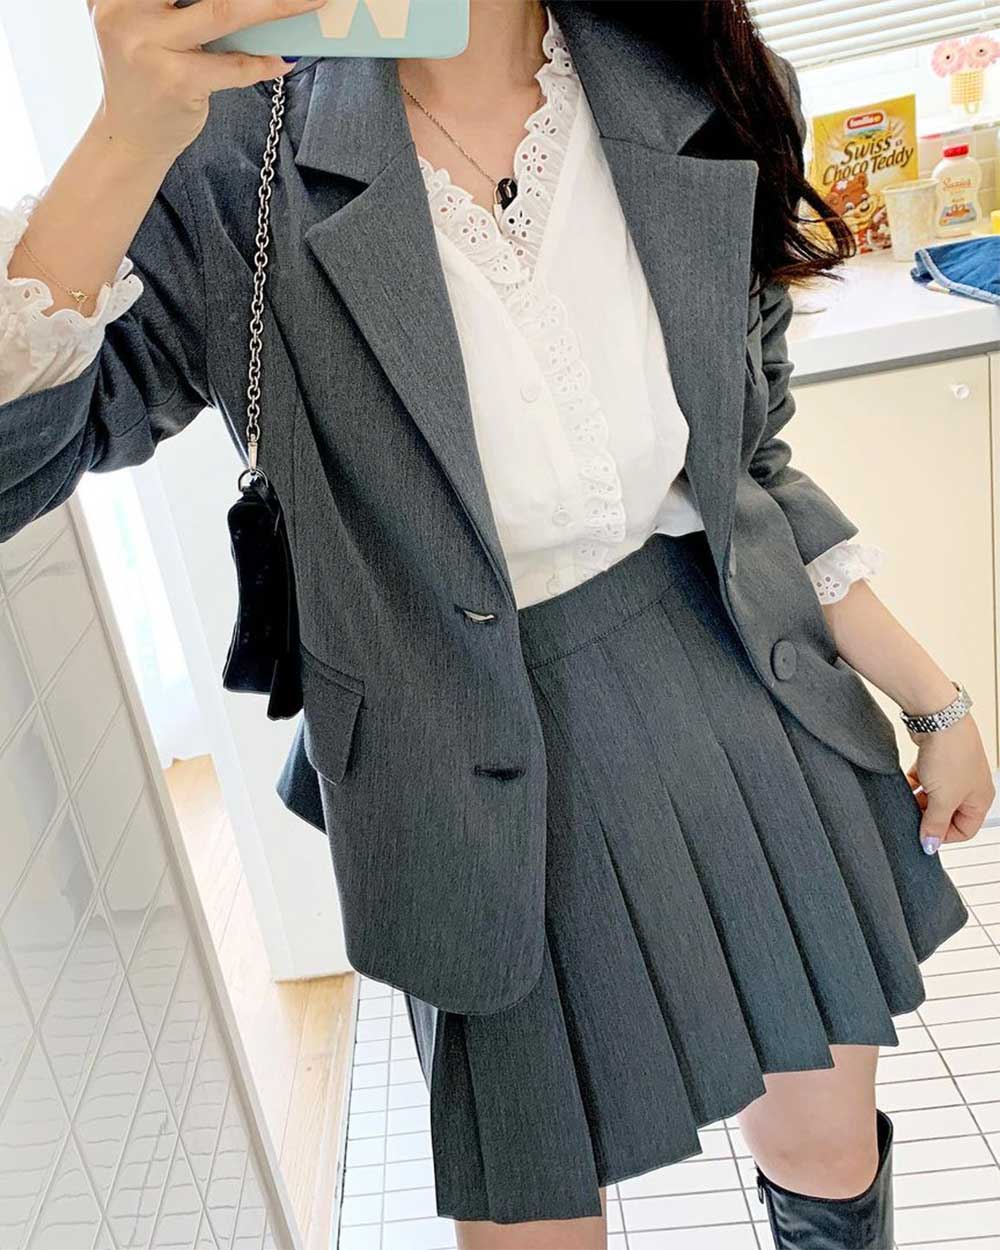 Korean fashion trend: Schoolgirl Tennis Skirt